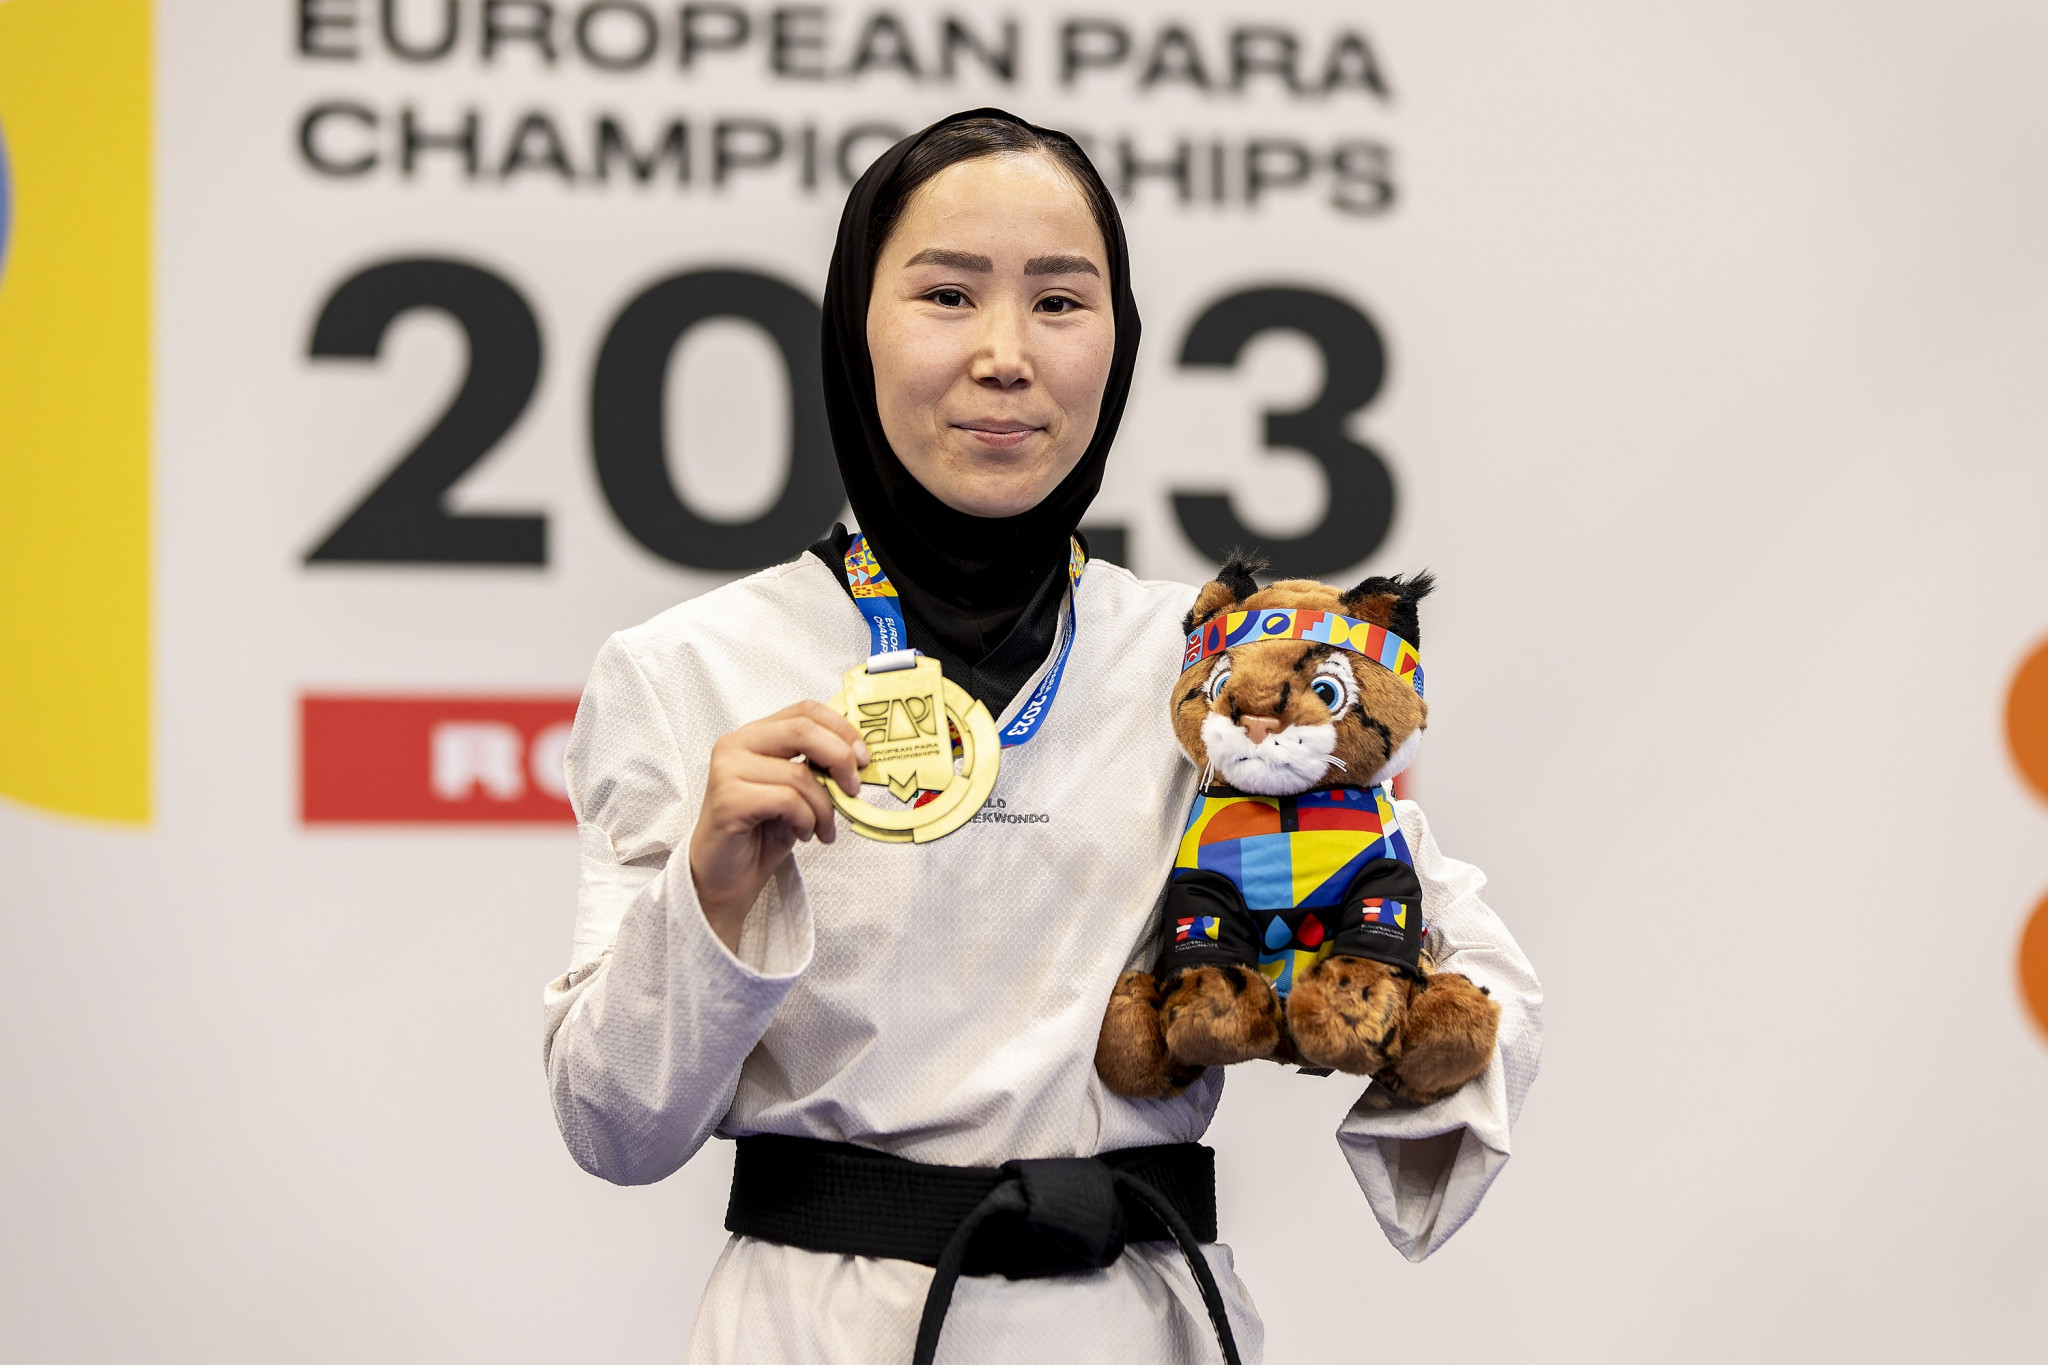 Afghan refugee claims emotional taekwondo gold at European Para Championships